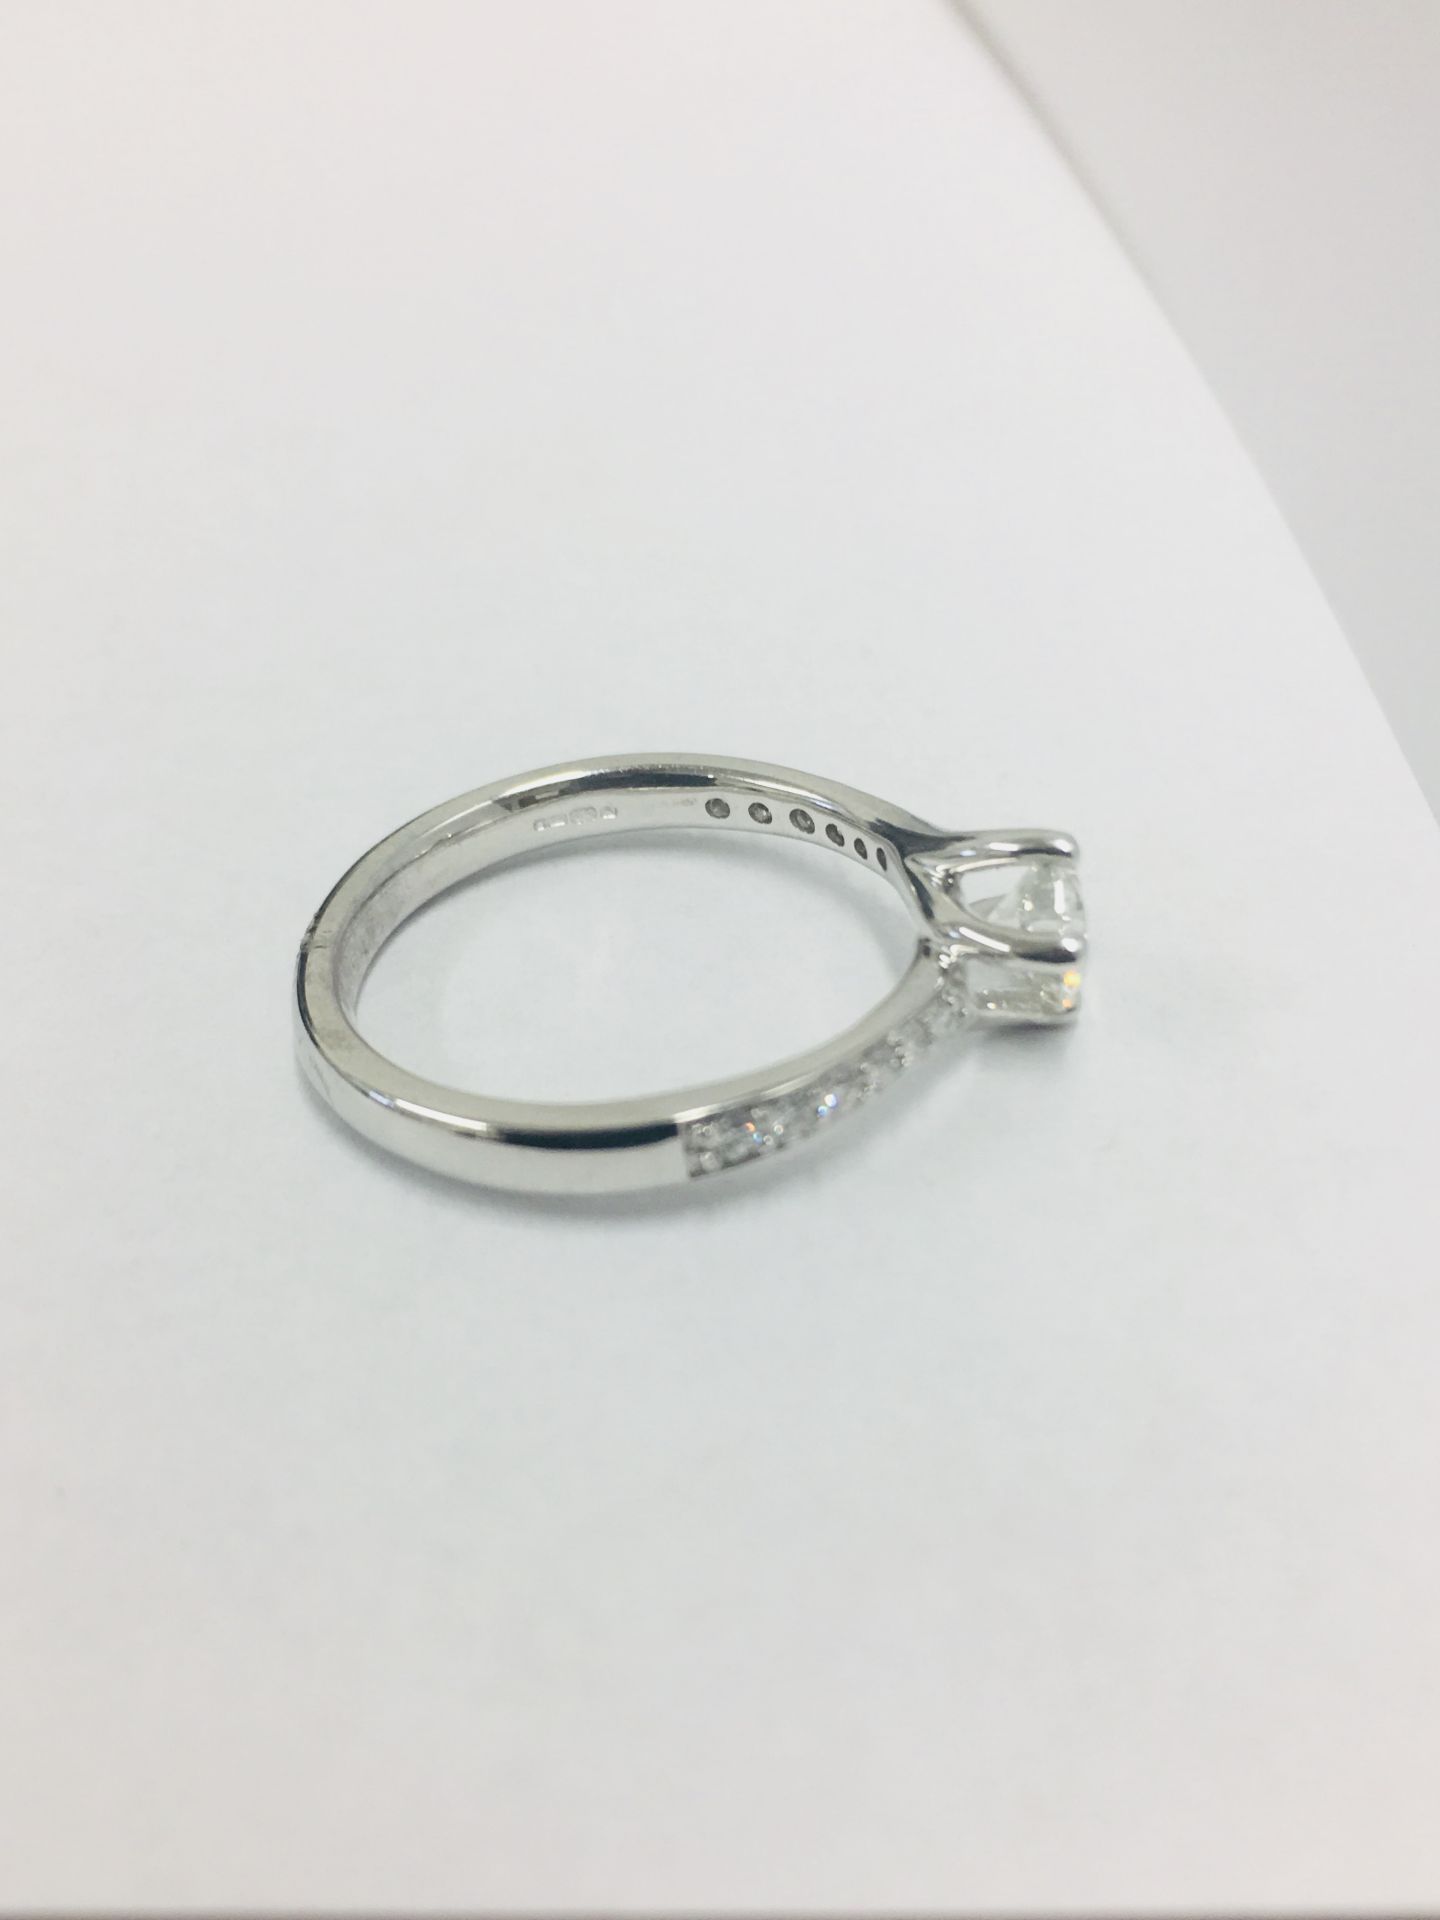 platinum damond solitaire ring,0.50ct brilliant cut diamond D colour vs clarity,3.83gms platinum - Image 6 of 7